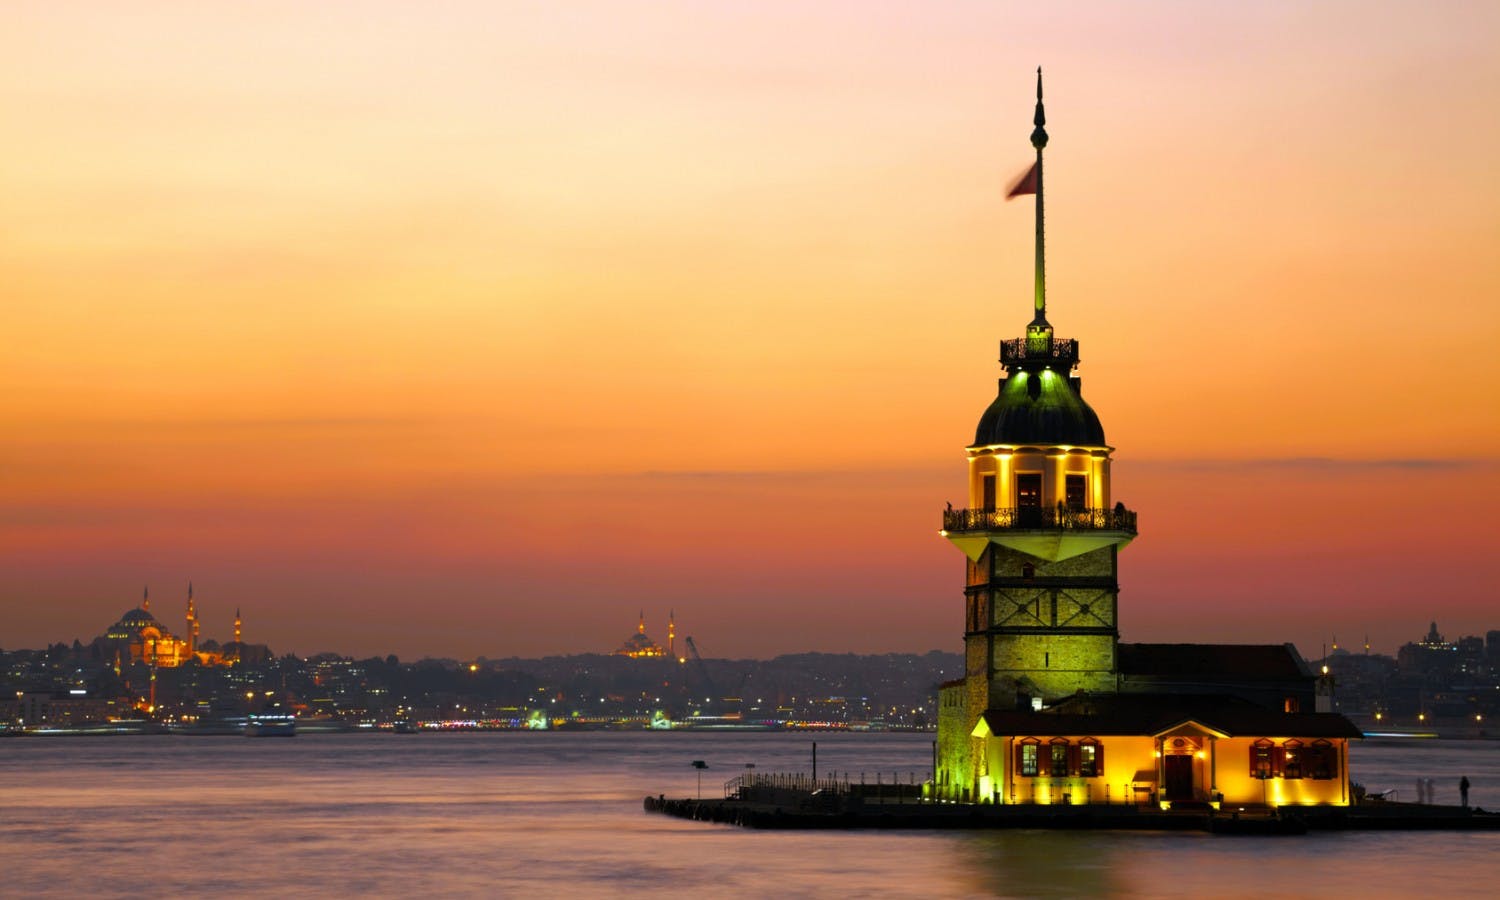 Istanbul Byzantine & Ottoman Relics - Day Tour